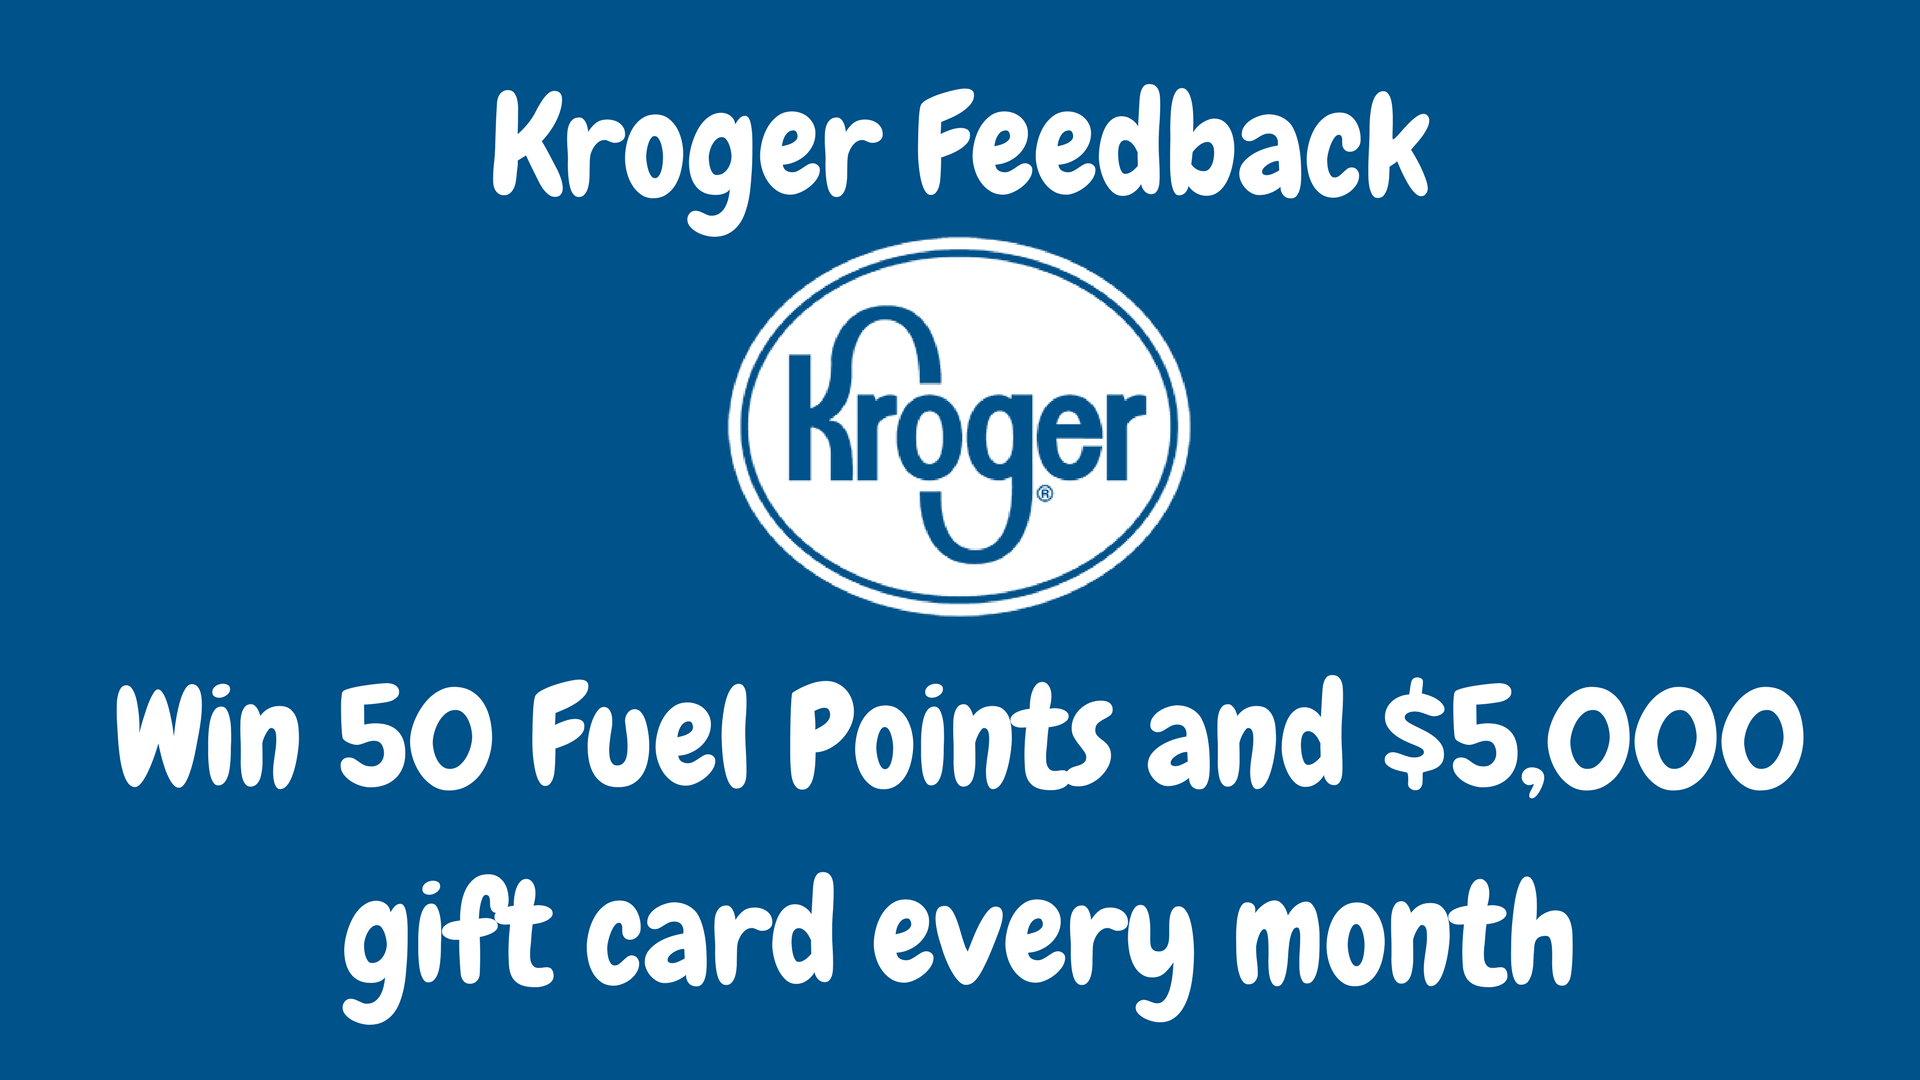 KrogerFeedback: Login To Participate On The Survey At www.krogerfeedback.com